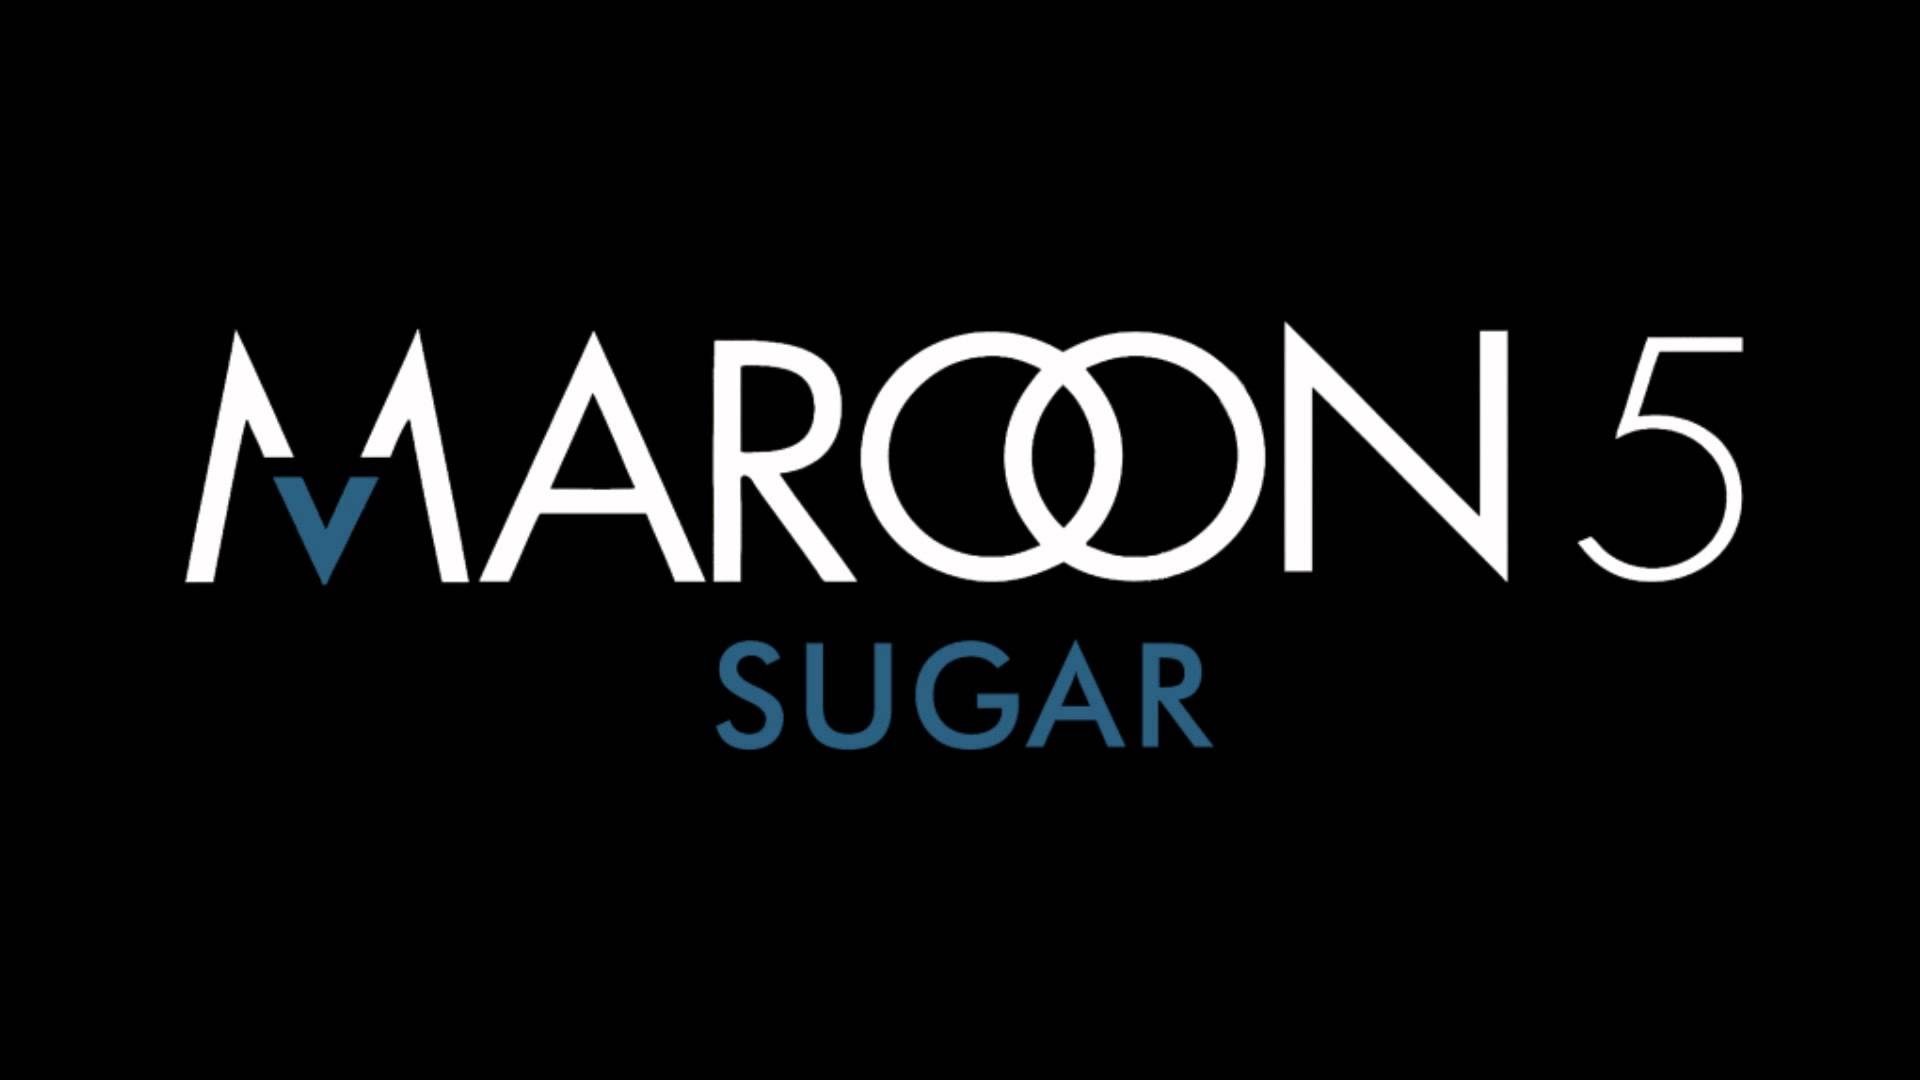 Maroon 5 Sugar Wallpaper Wallpaper 1920x1080